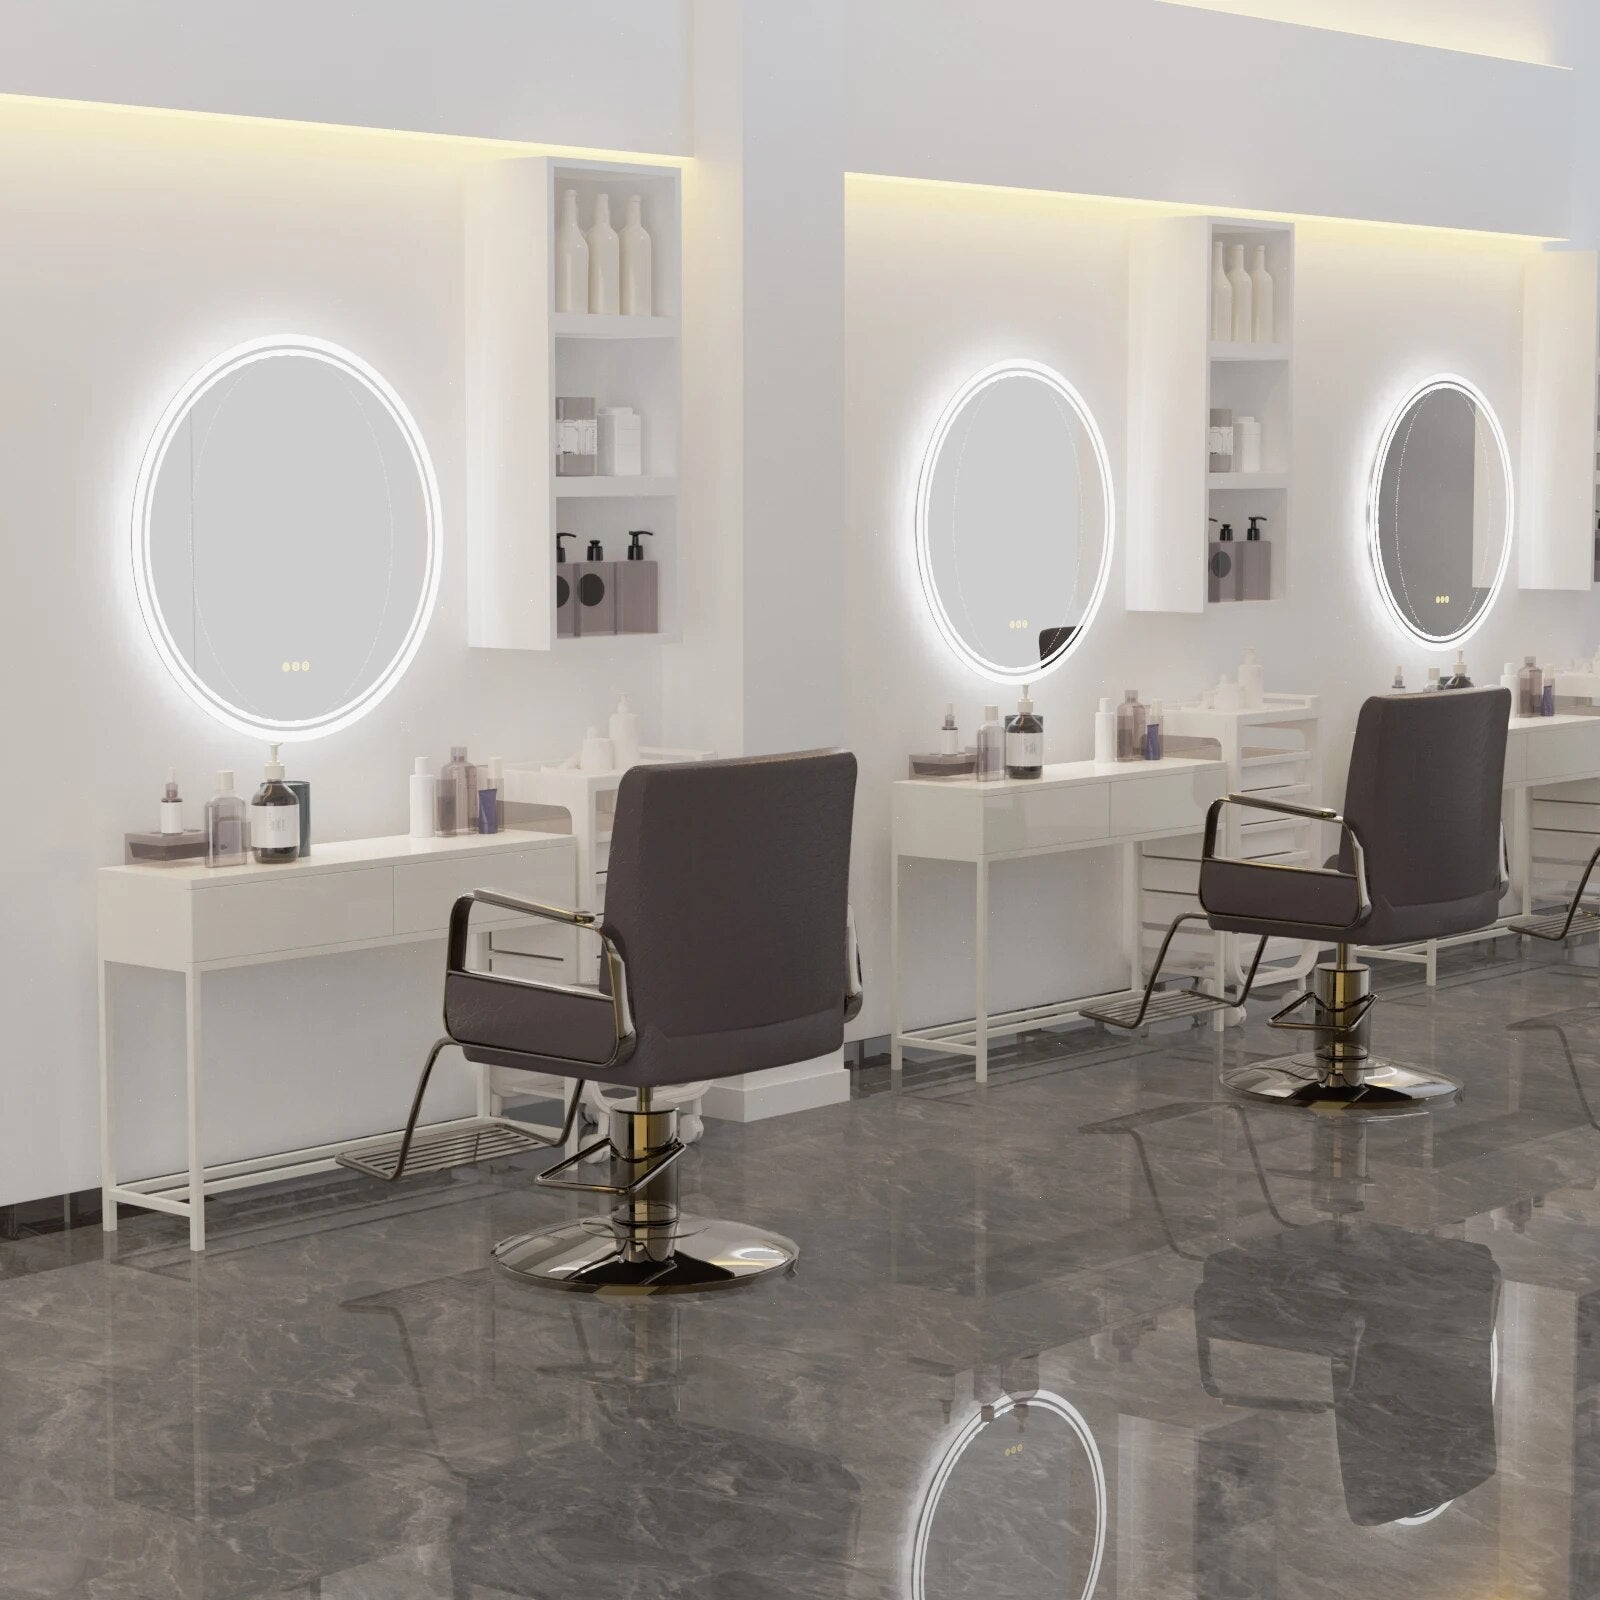 VENUS Illuminate Large round Mirror for Bathroom | Touch Screen Dimmable Anti-Fog Bathroom LED Light Mirror